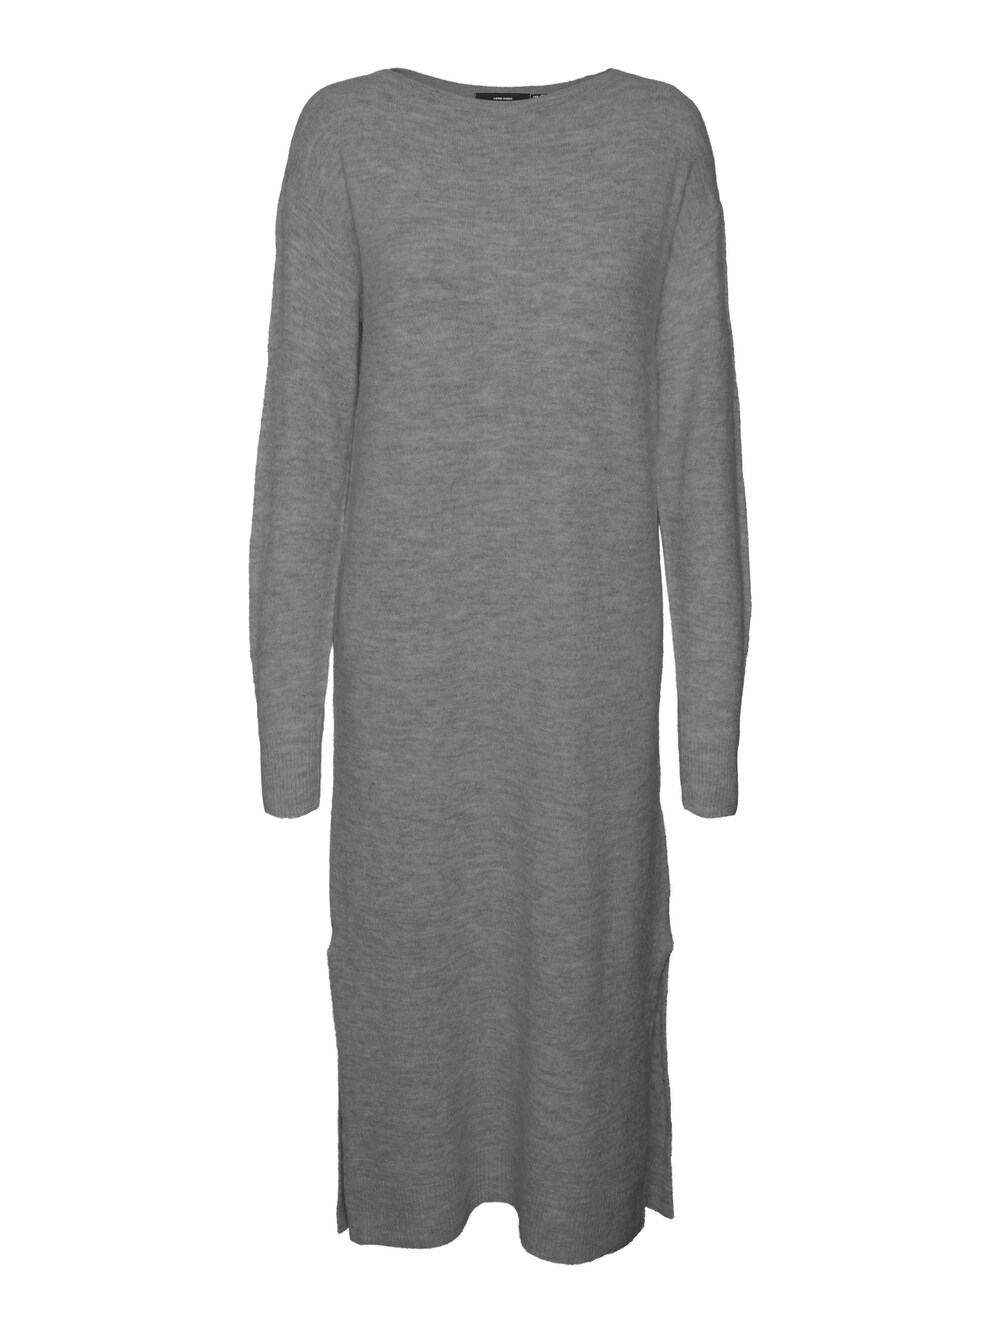 Вязанное платье Vero Moda LEFILE, пестрый серый